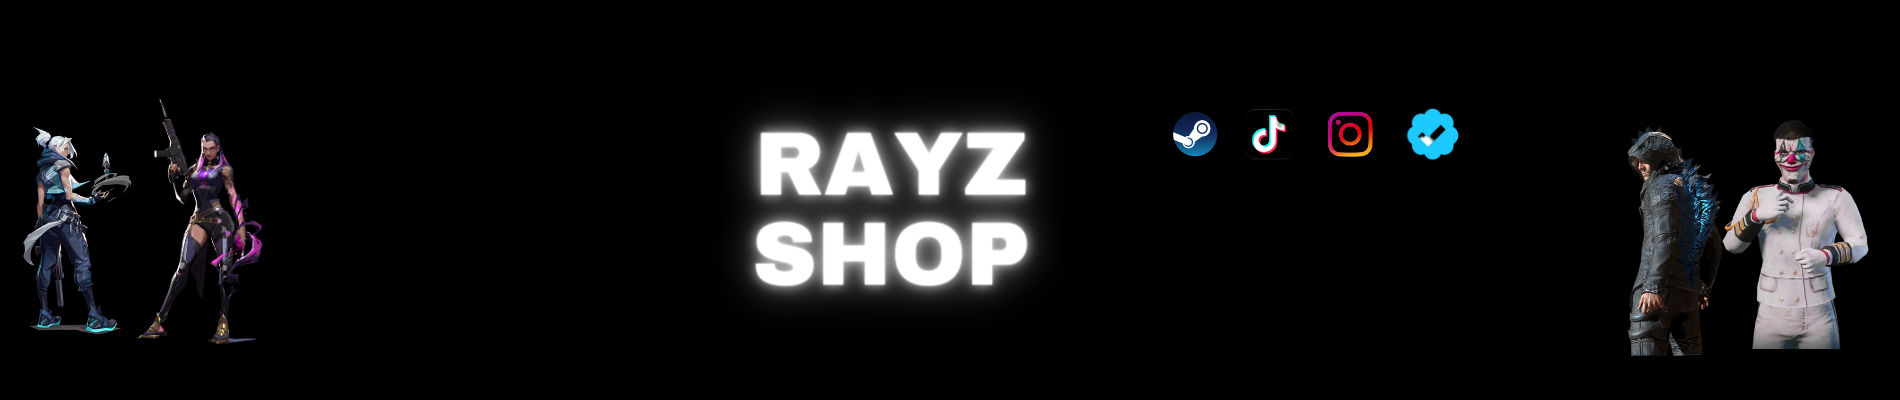 RayzShop